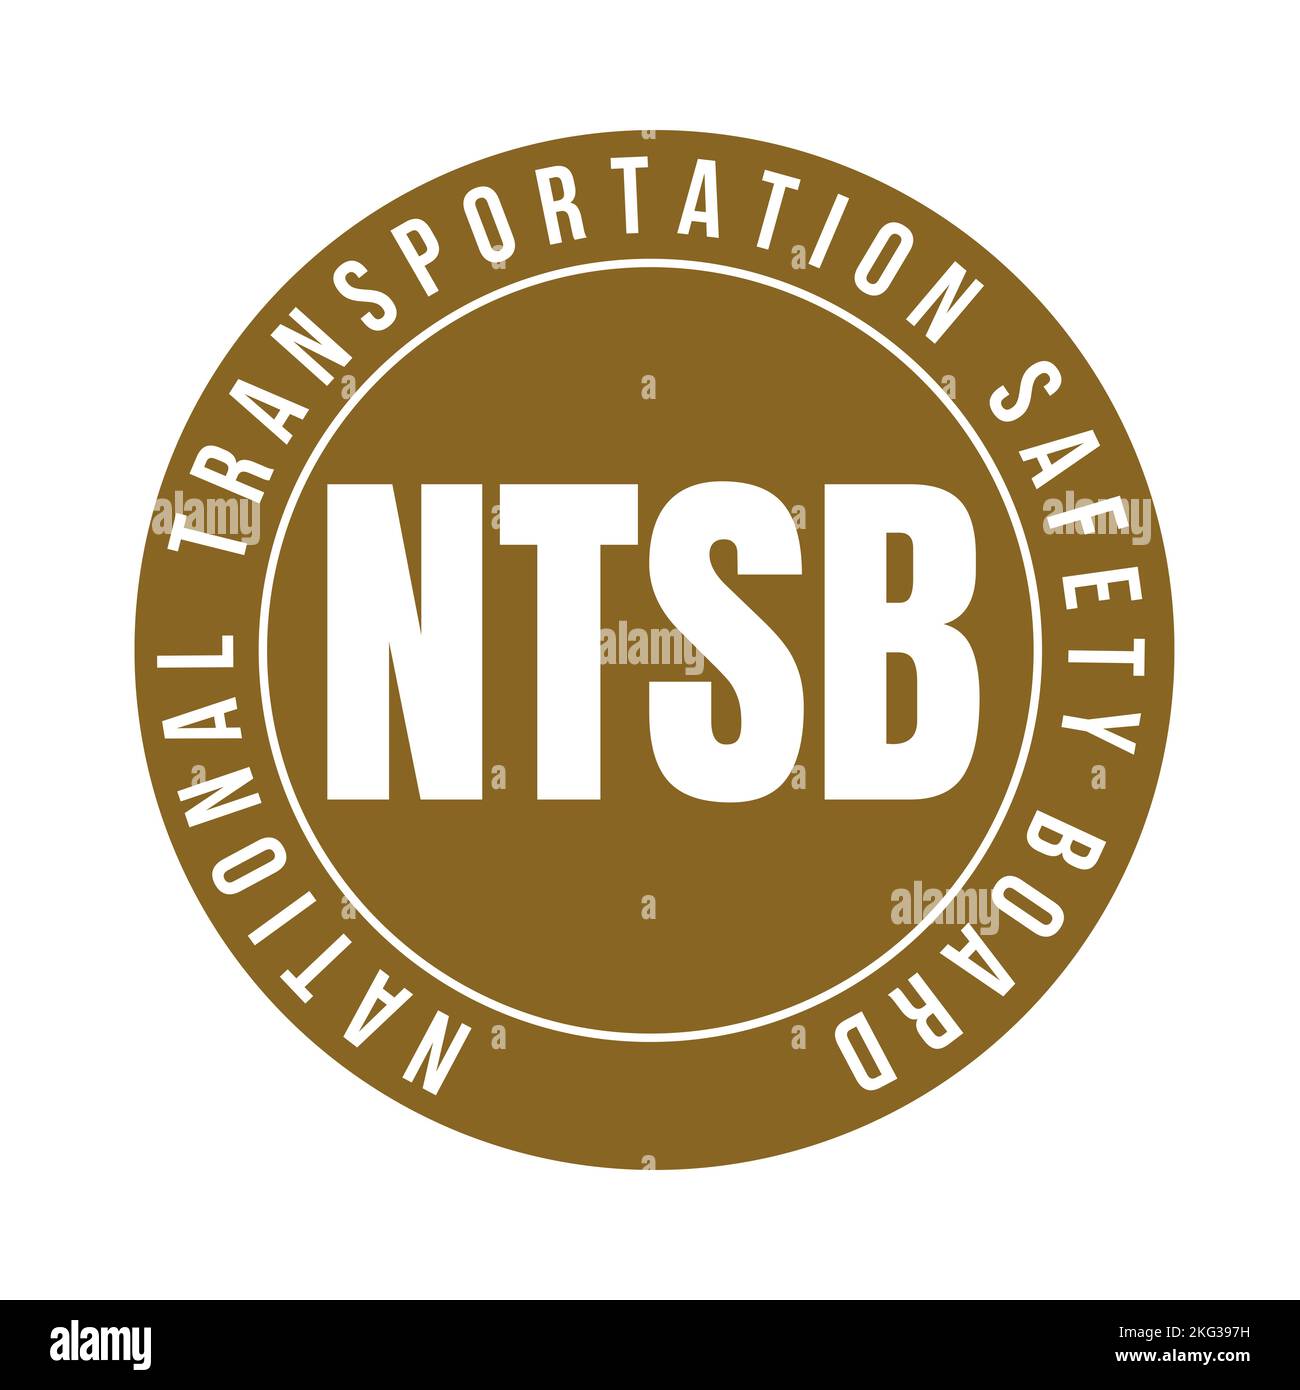 NTSB, national transportation safety board symbol icon Stock Photo